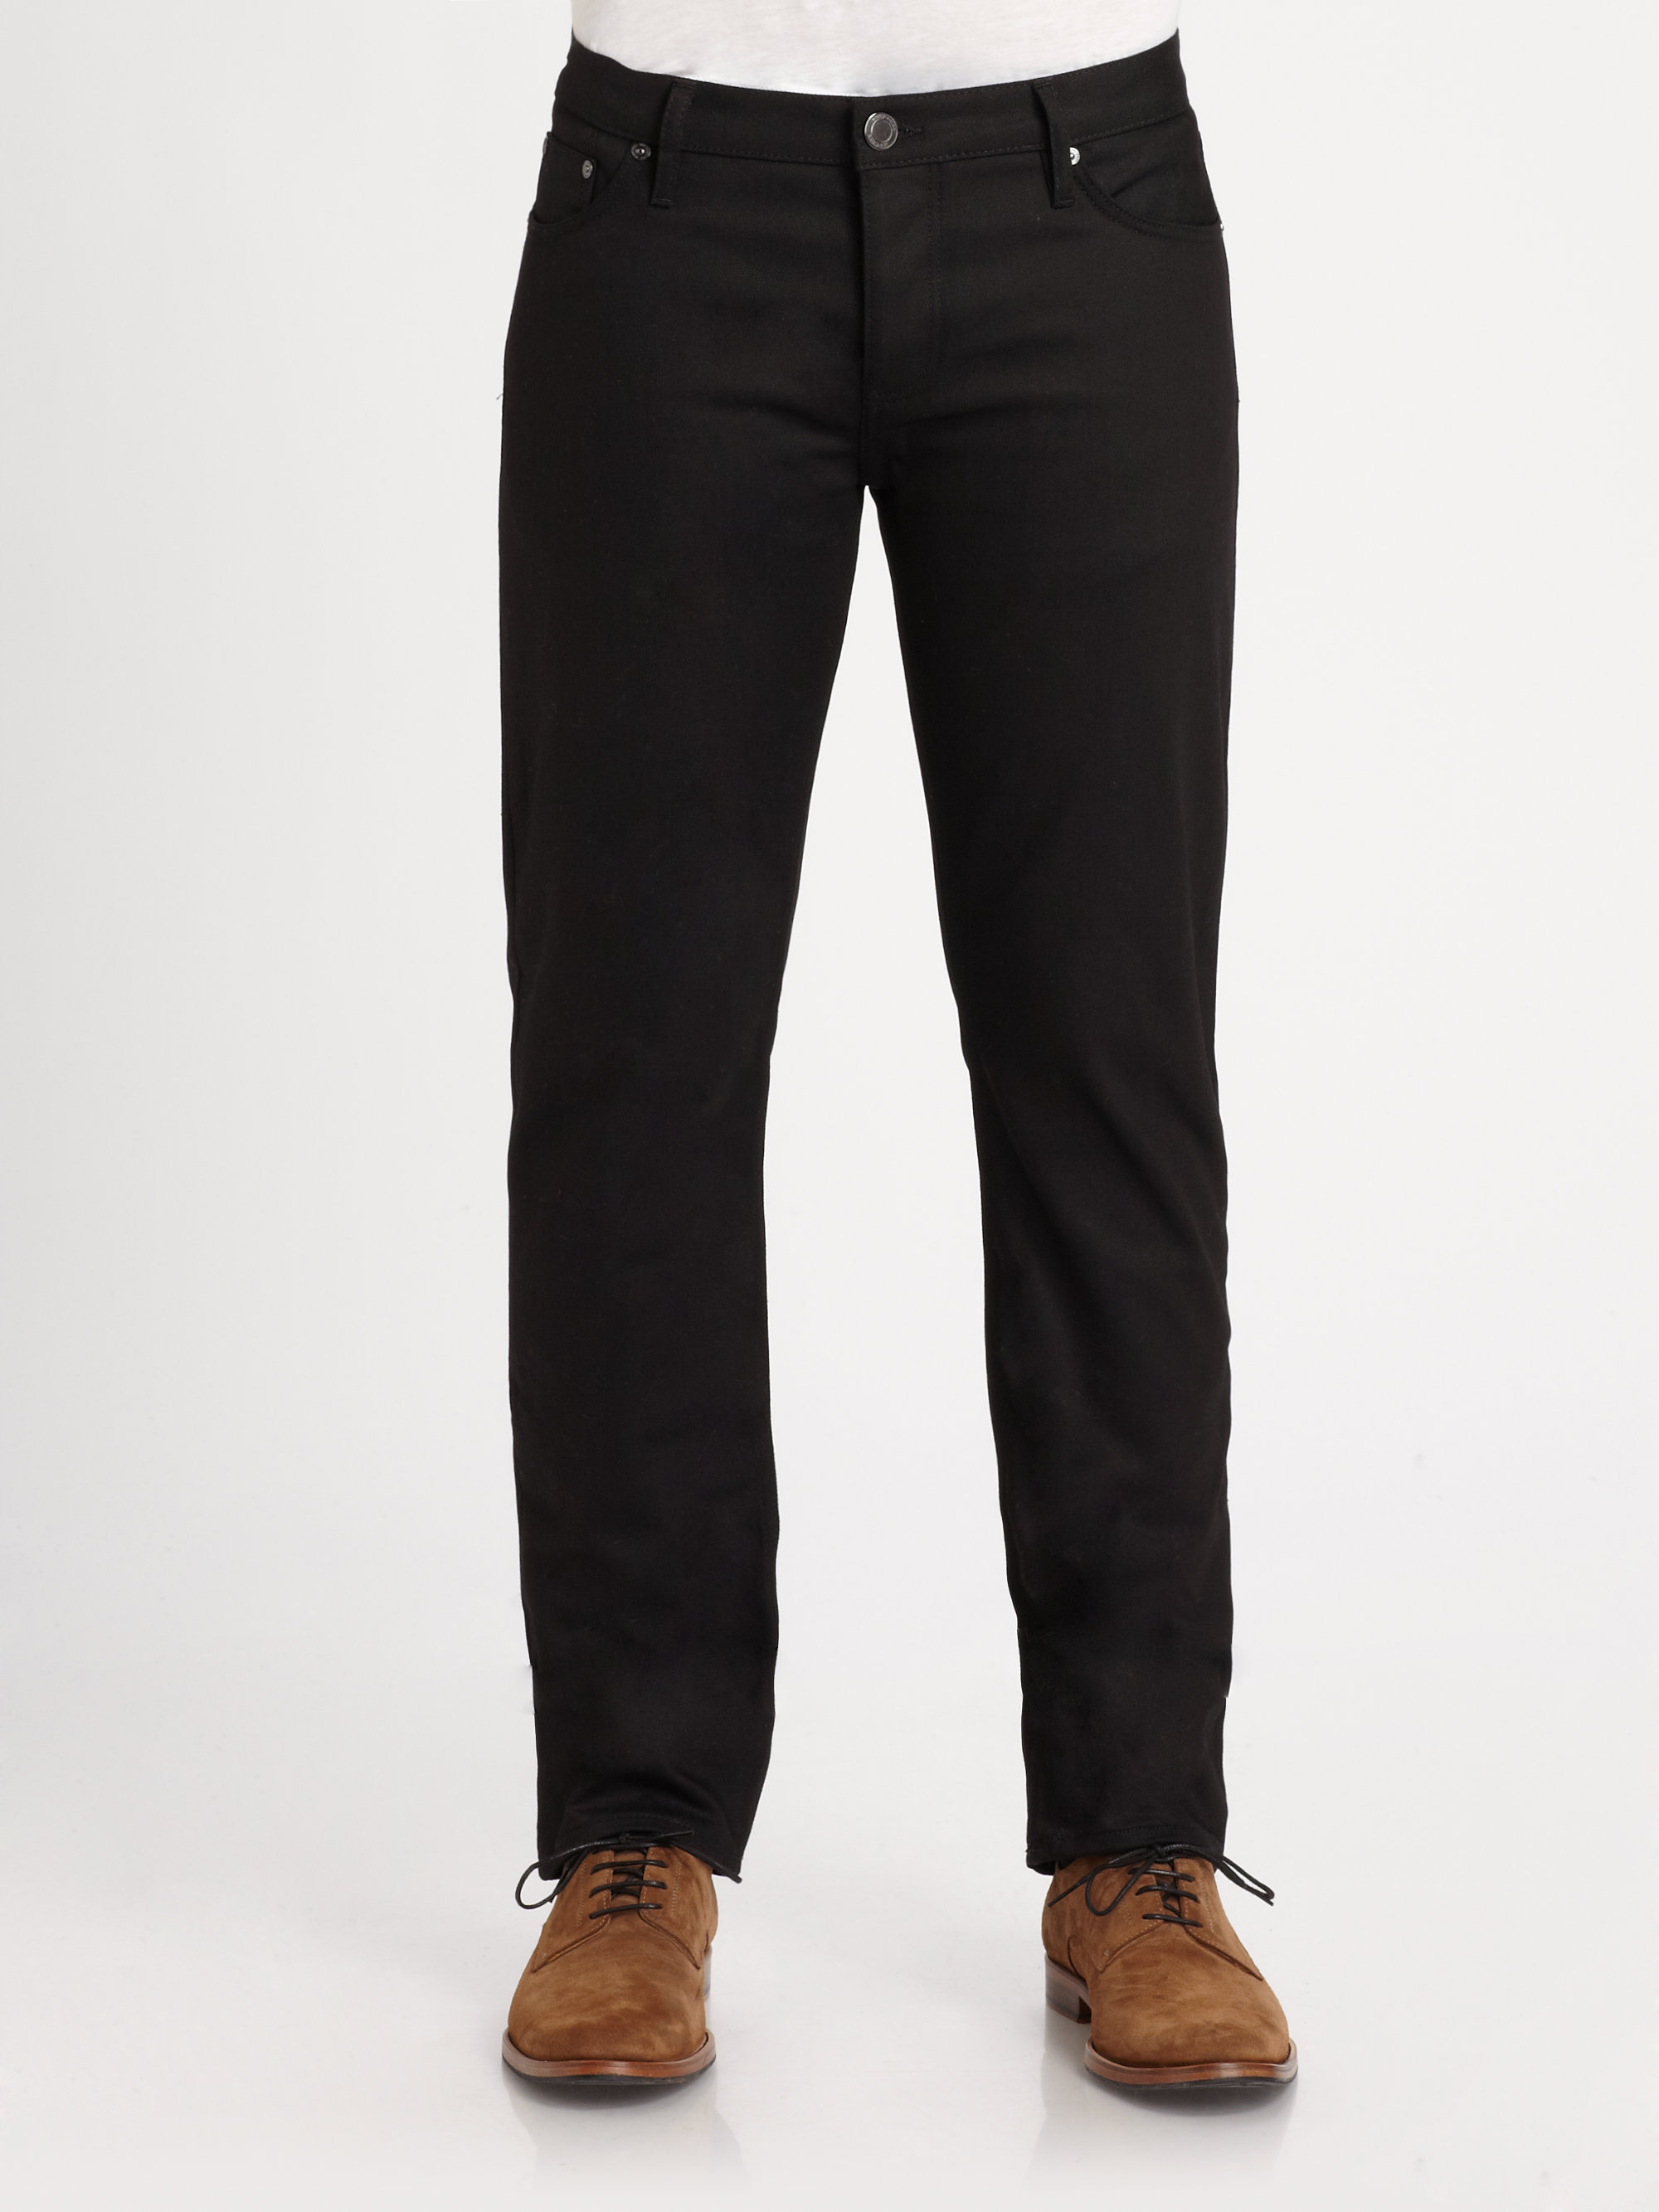 Lyst - Burberry Steadman Five-pocket Jeans in Black for Men